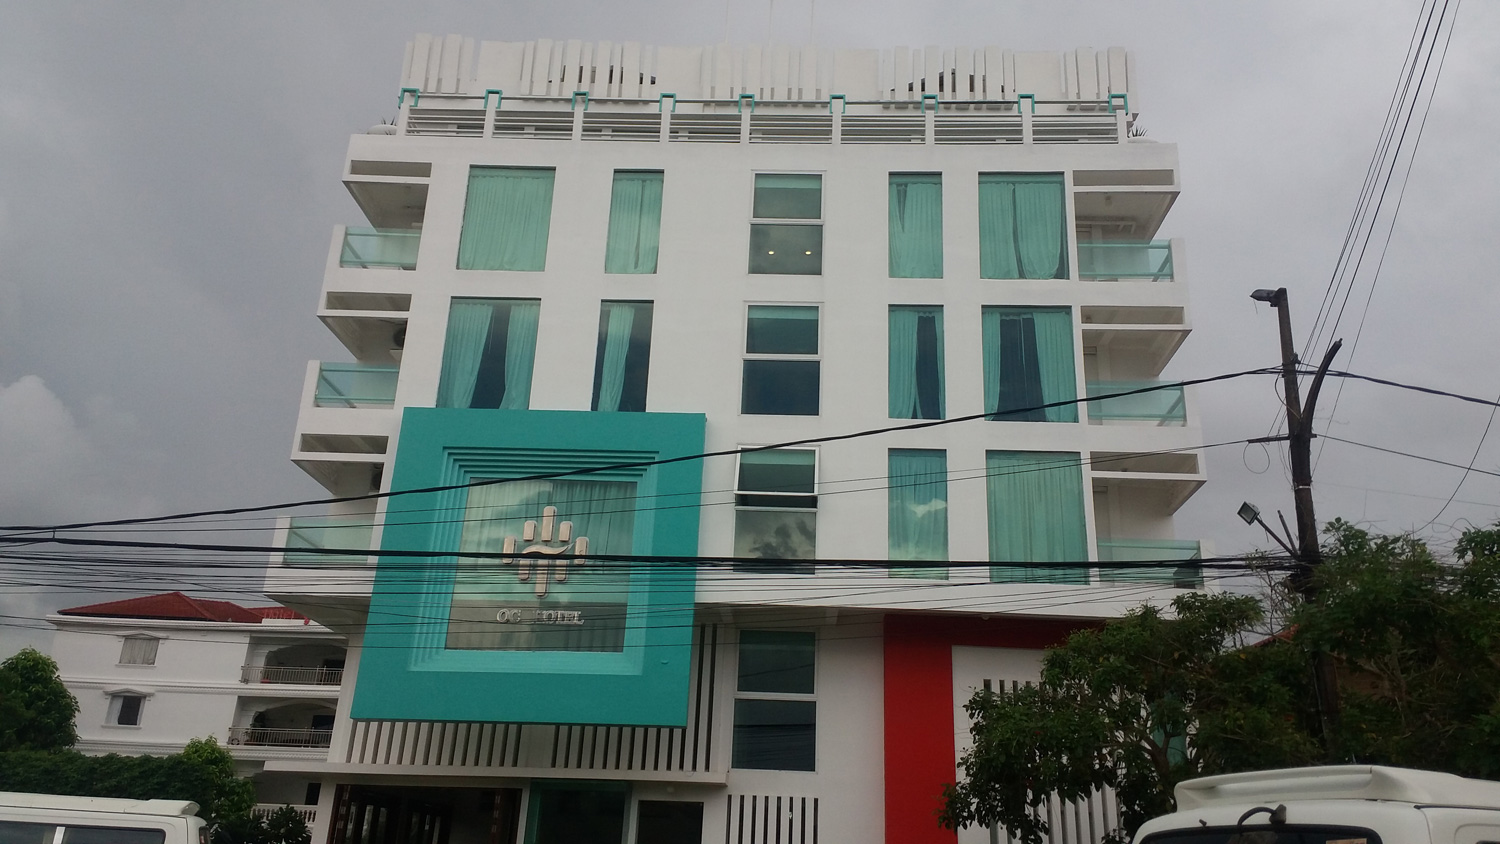 OC BOUTIQUE HOTEL (4 star hotel) in SIHANOUK VILLE